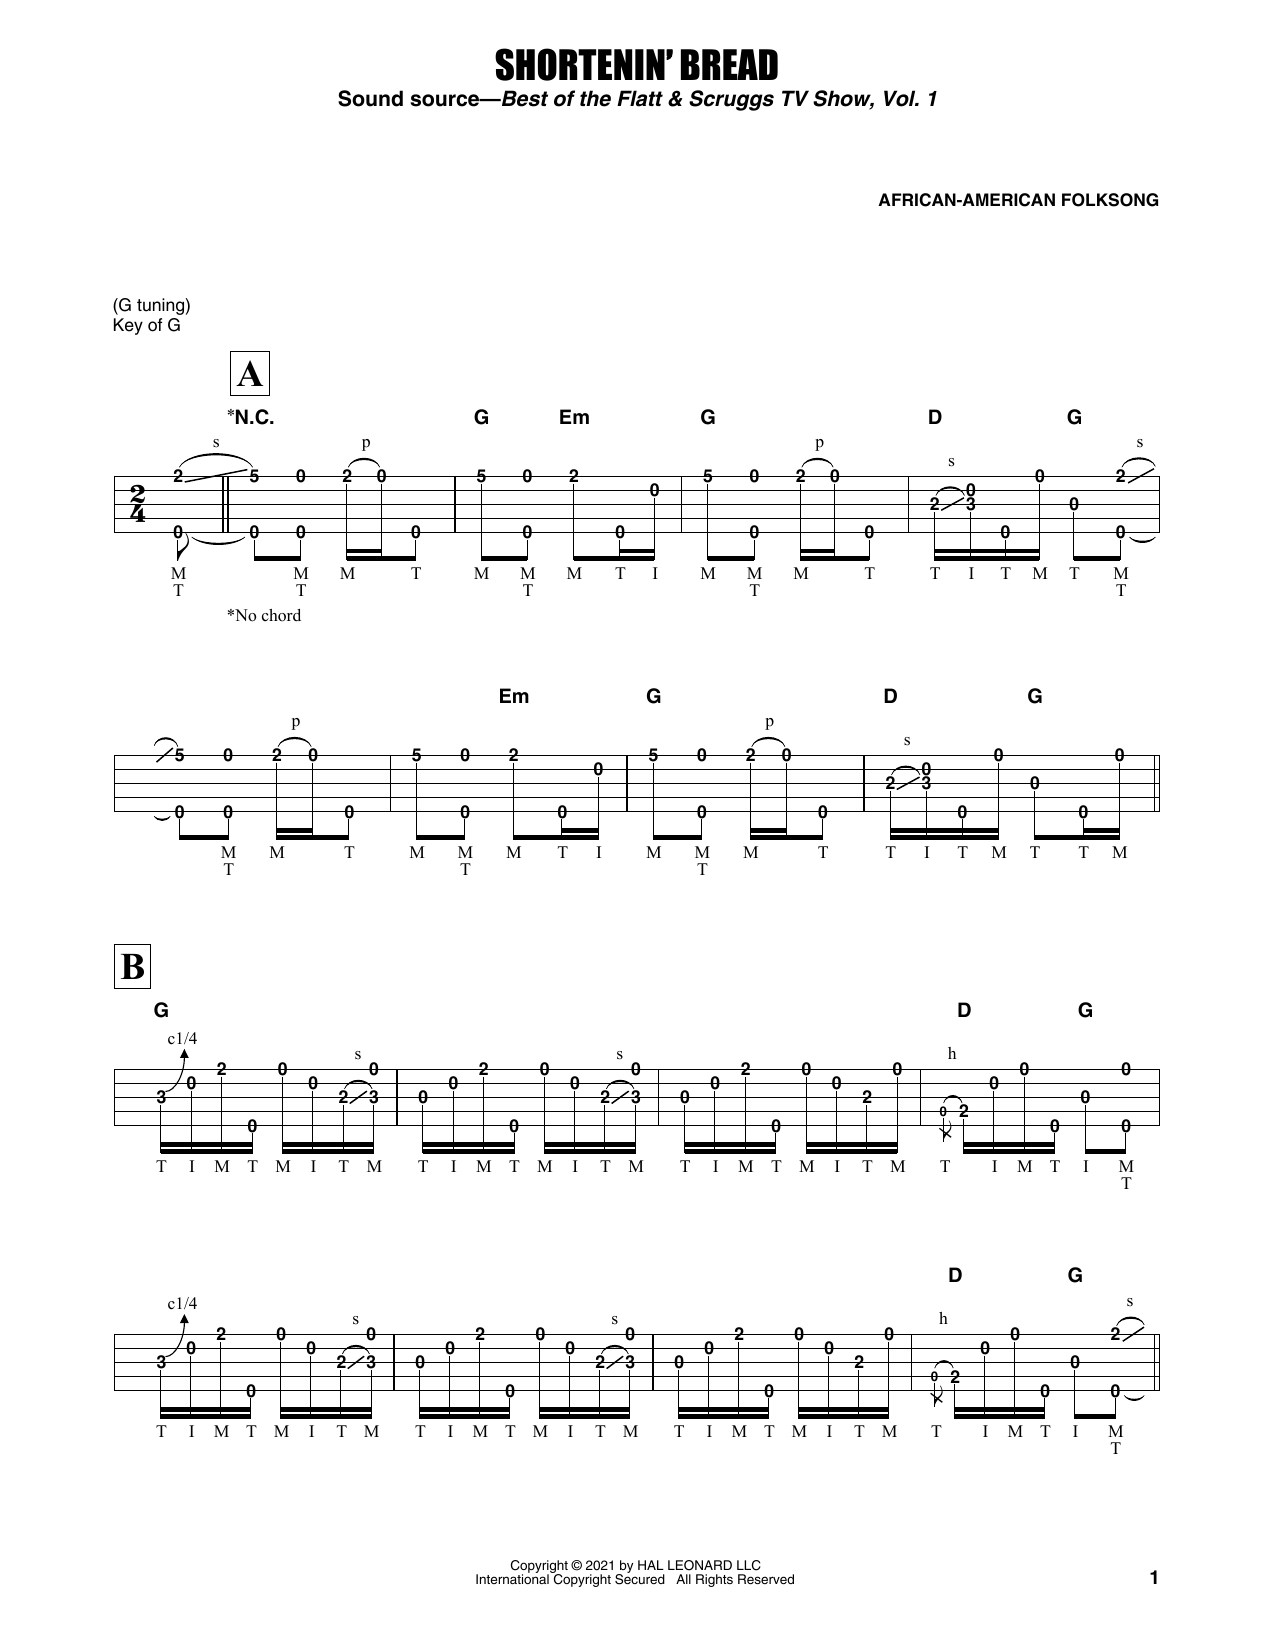 Earl Scruggs Shortenin' Bread Sheet Music Notes & Chords for Banjo Tab - Download or Print PDF